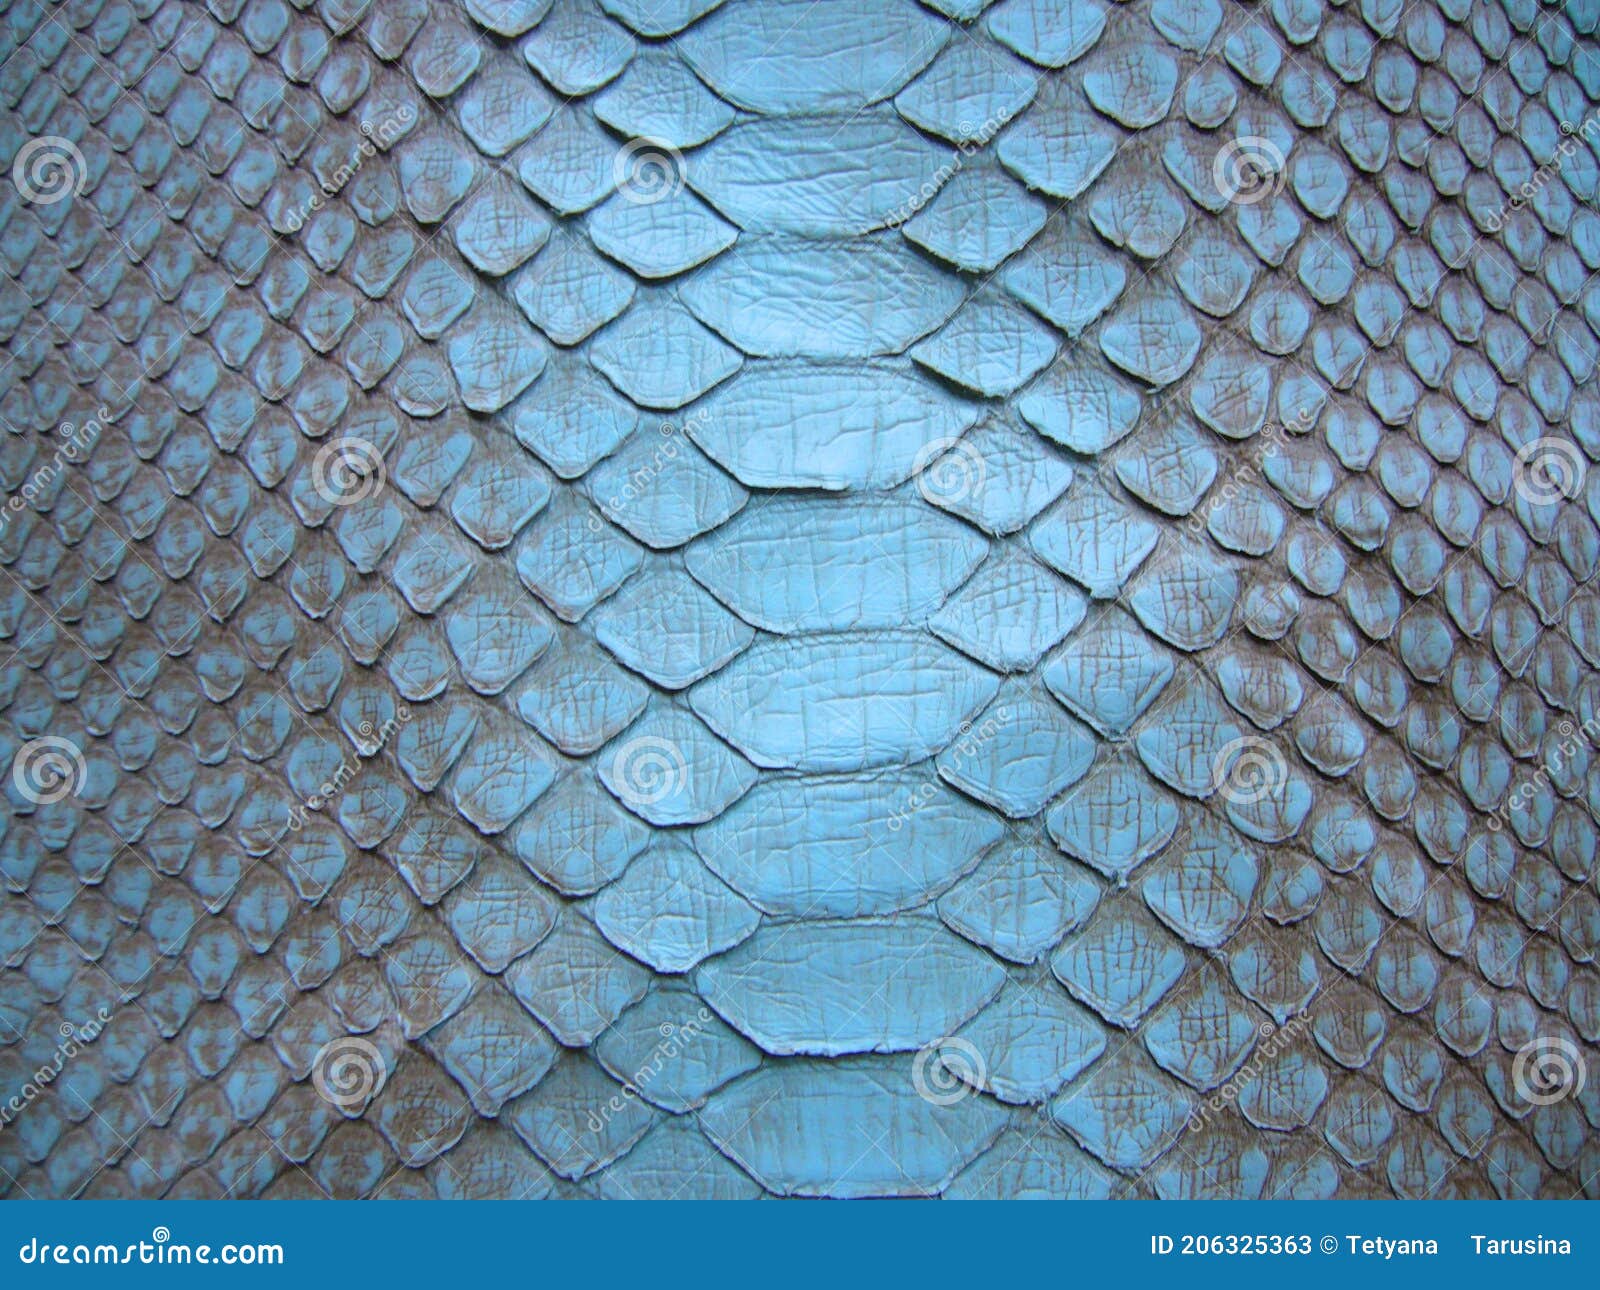 Blue python skin snake. stock image. Image of textile - 206325363